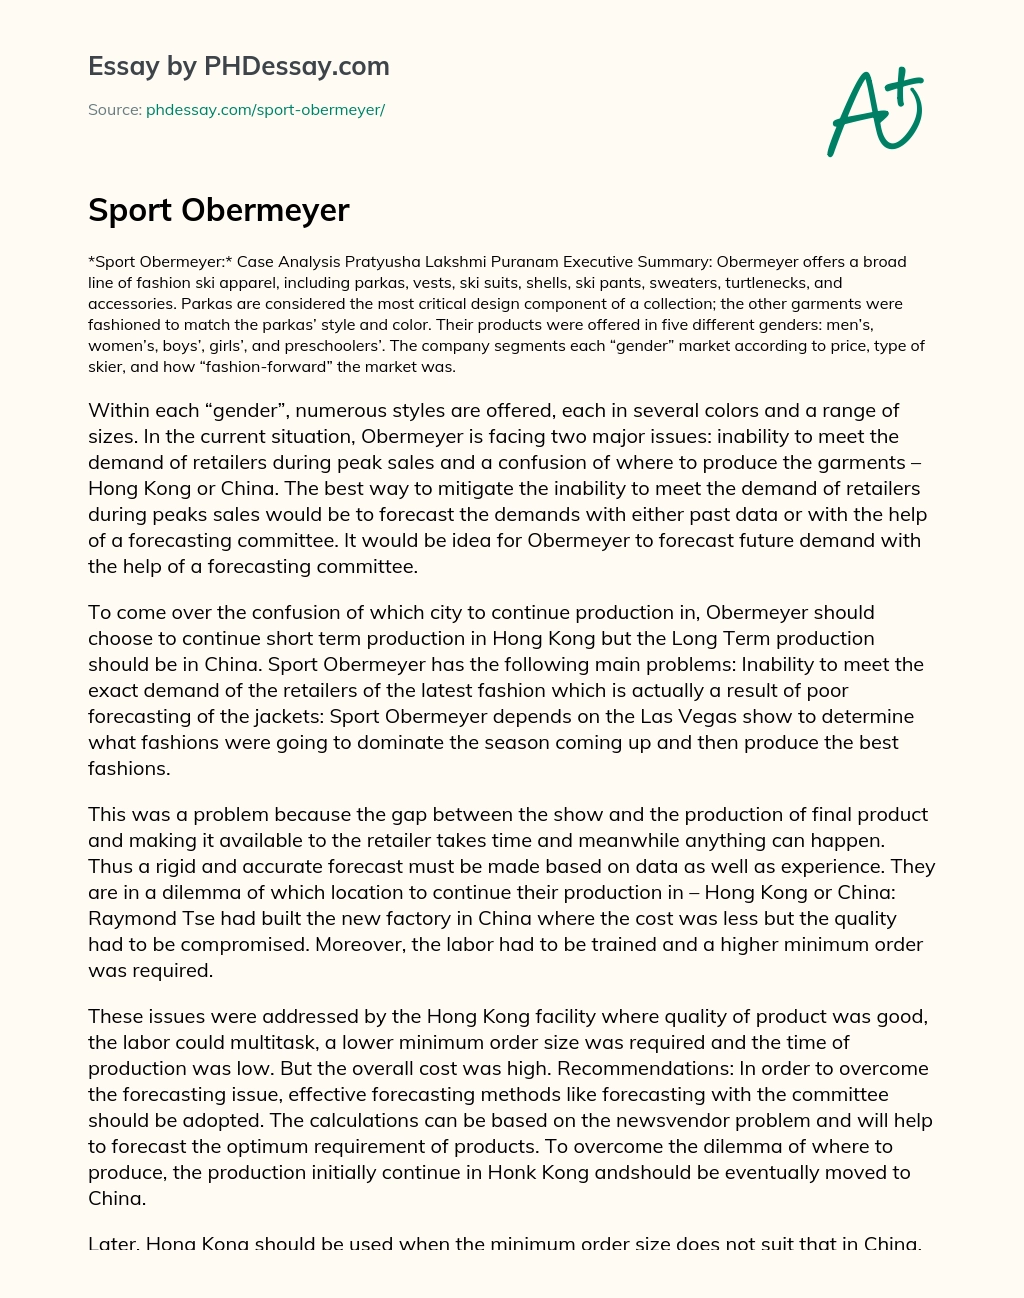 Sport Obermeyer essay